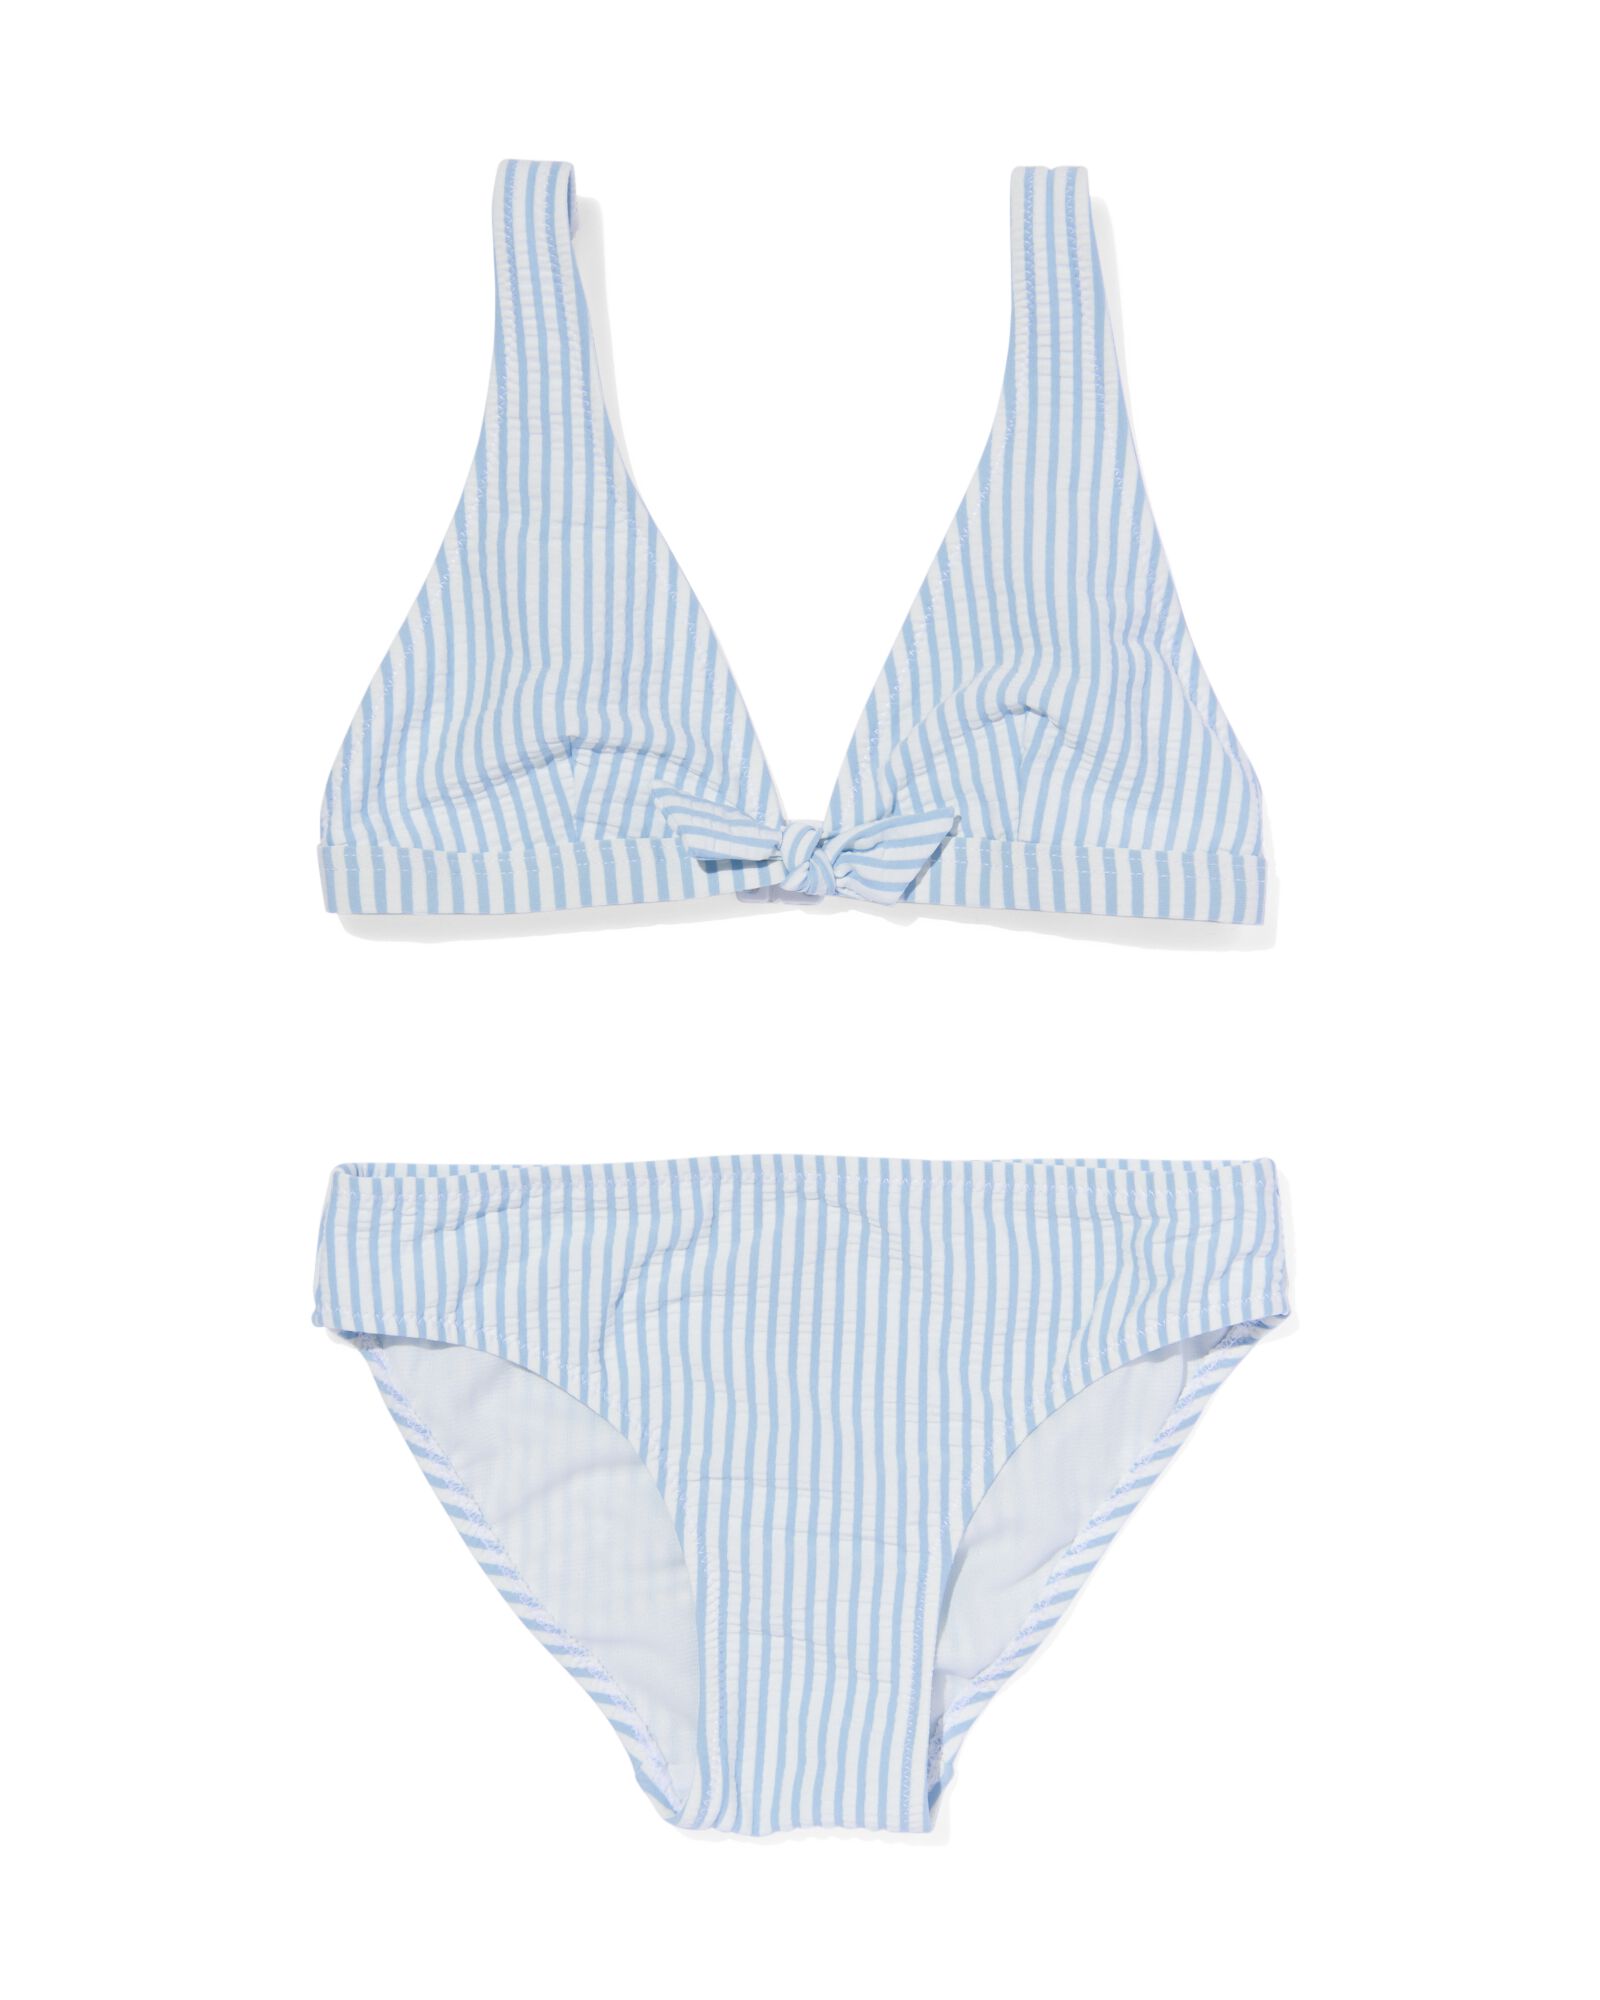 kinder bikini met strepen lichtblauw 158/164 - 22209633 - HEMA